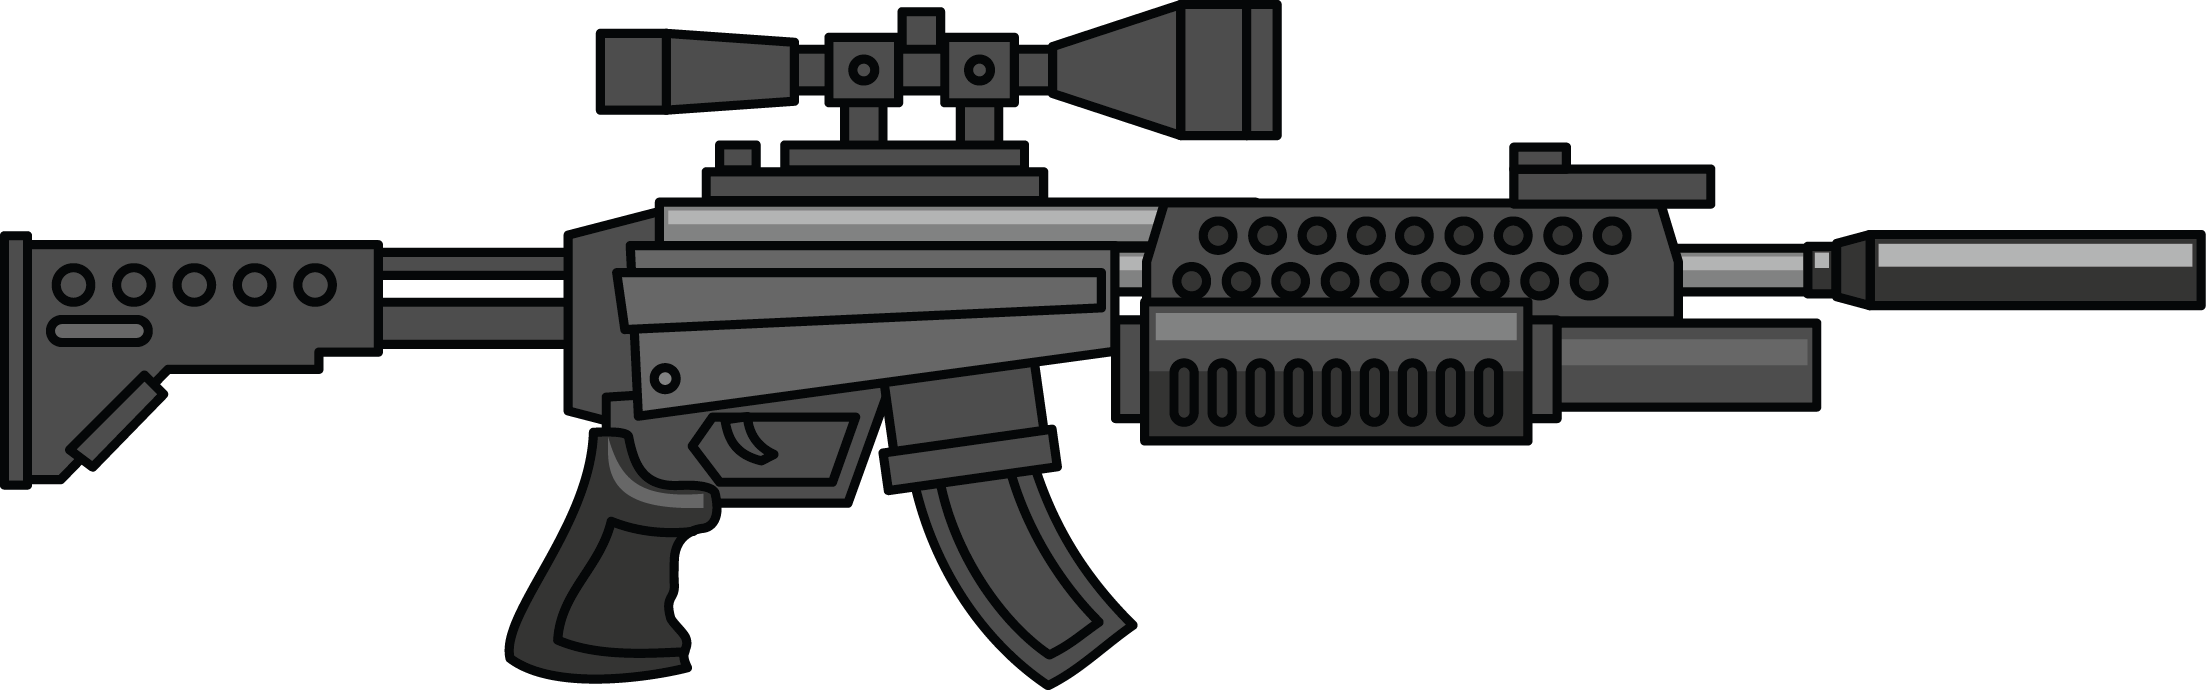 Gun clipart image